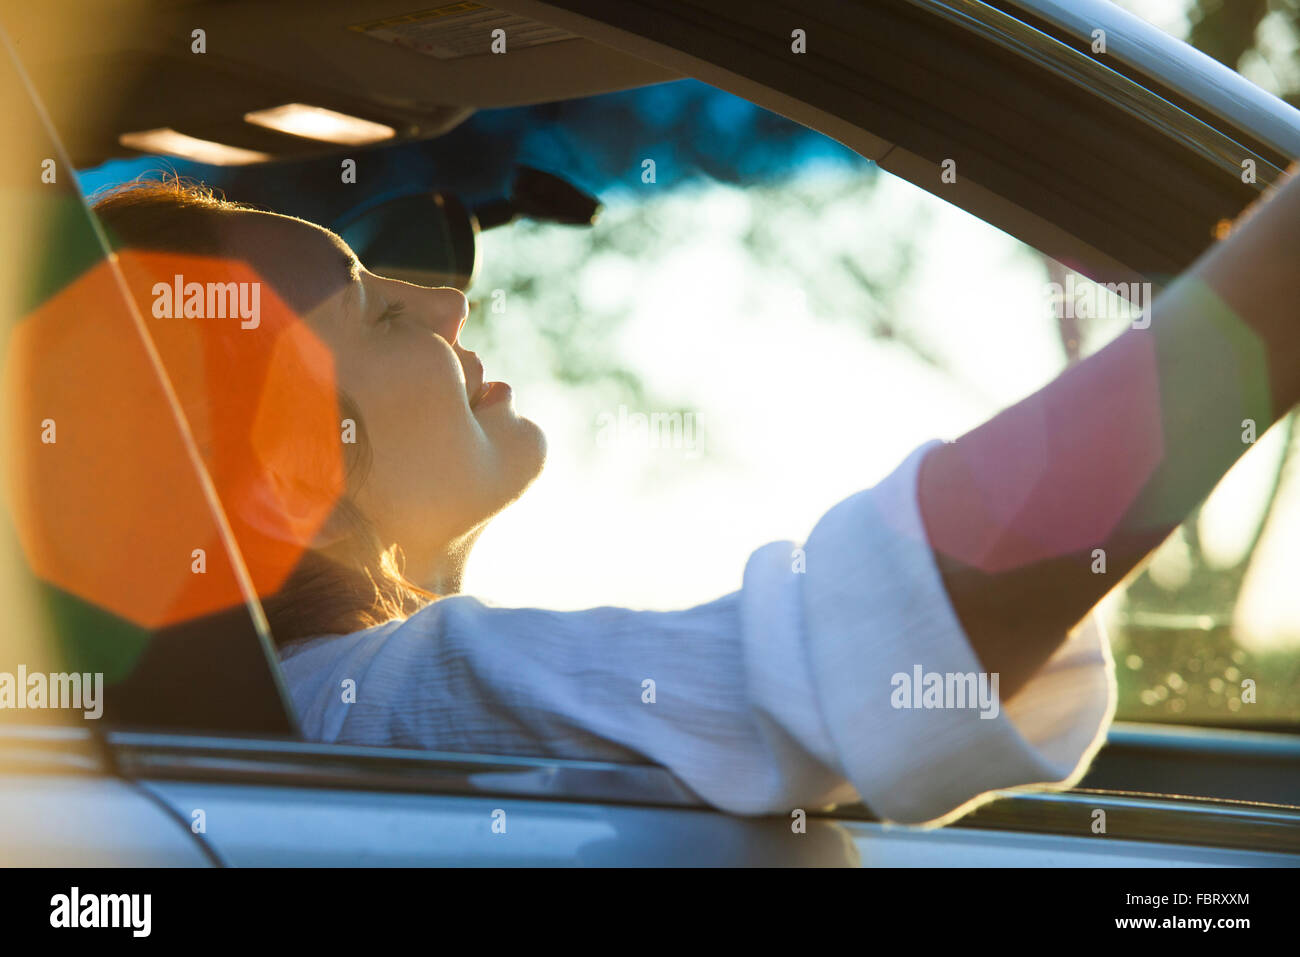 Woman passenger riding in car Stock Photo